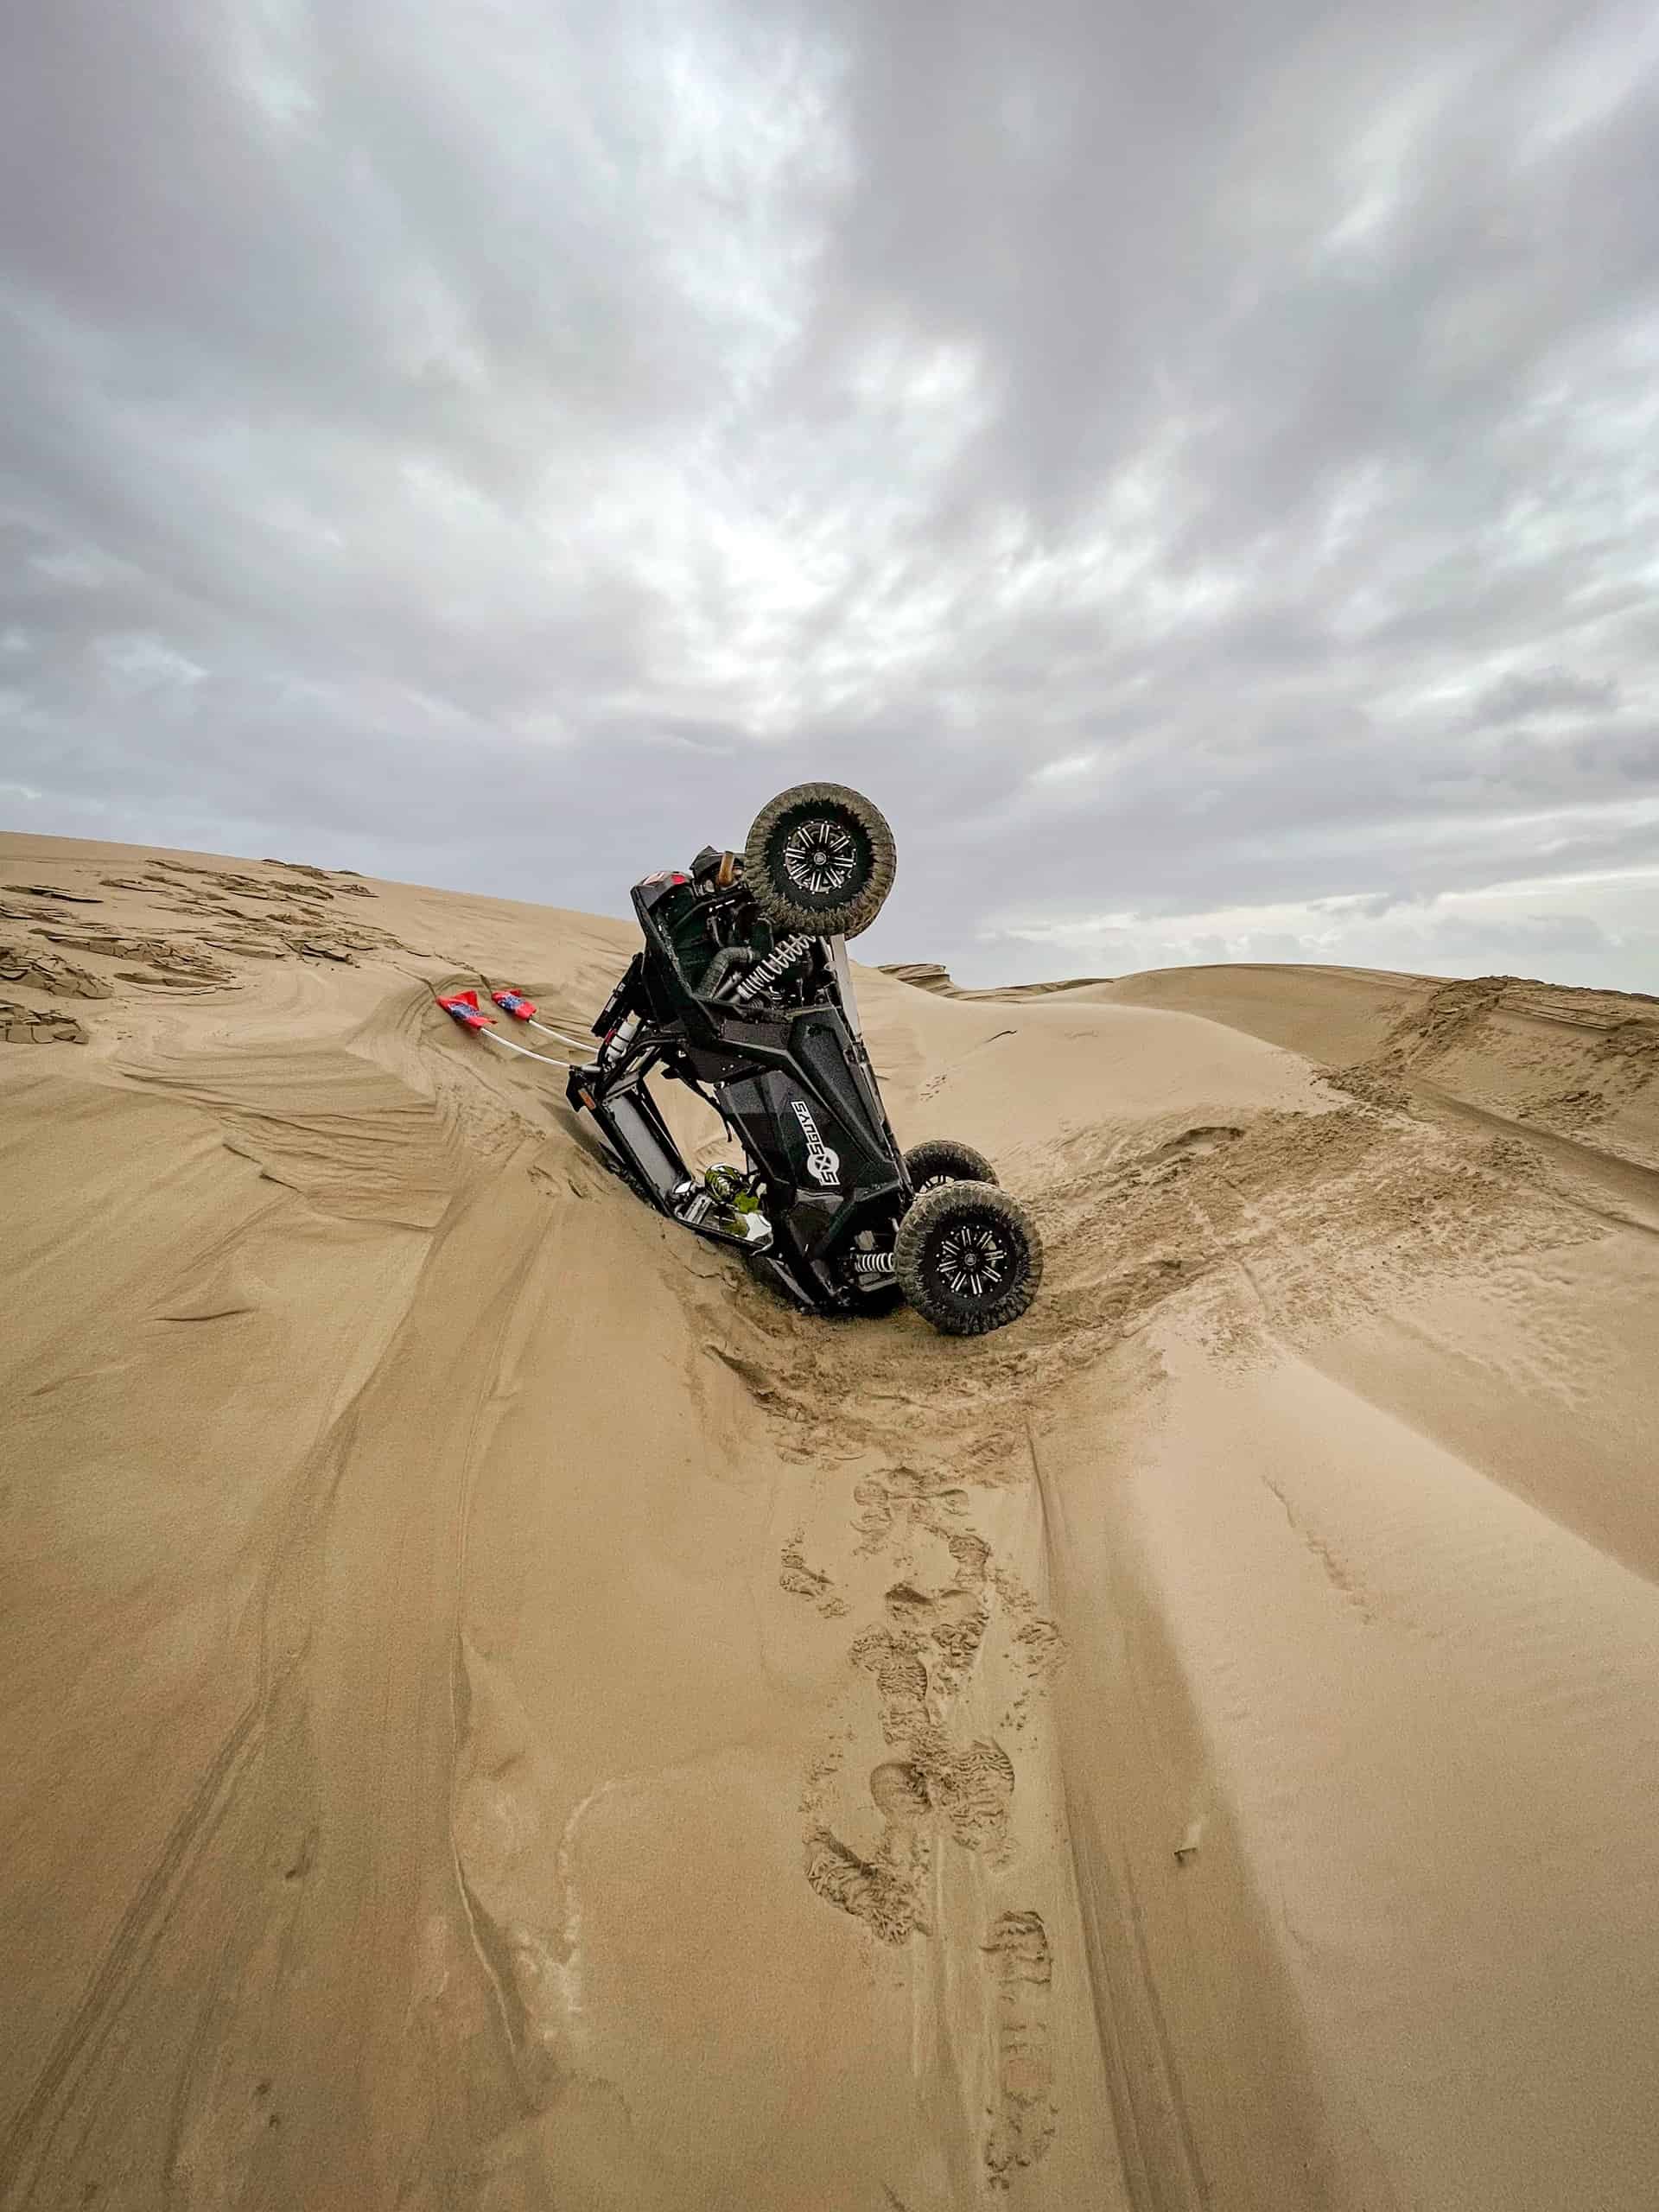 A quad bike on a sand dune in the desert.